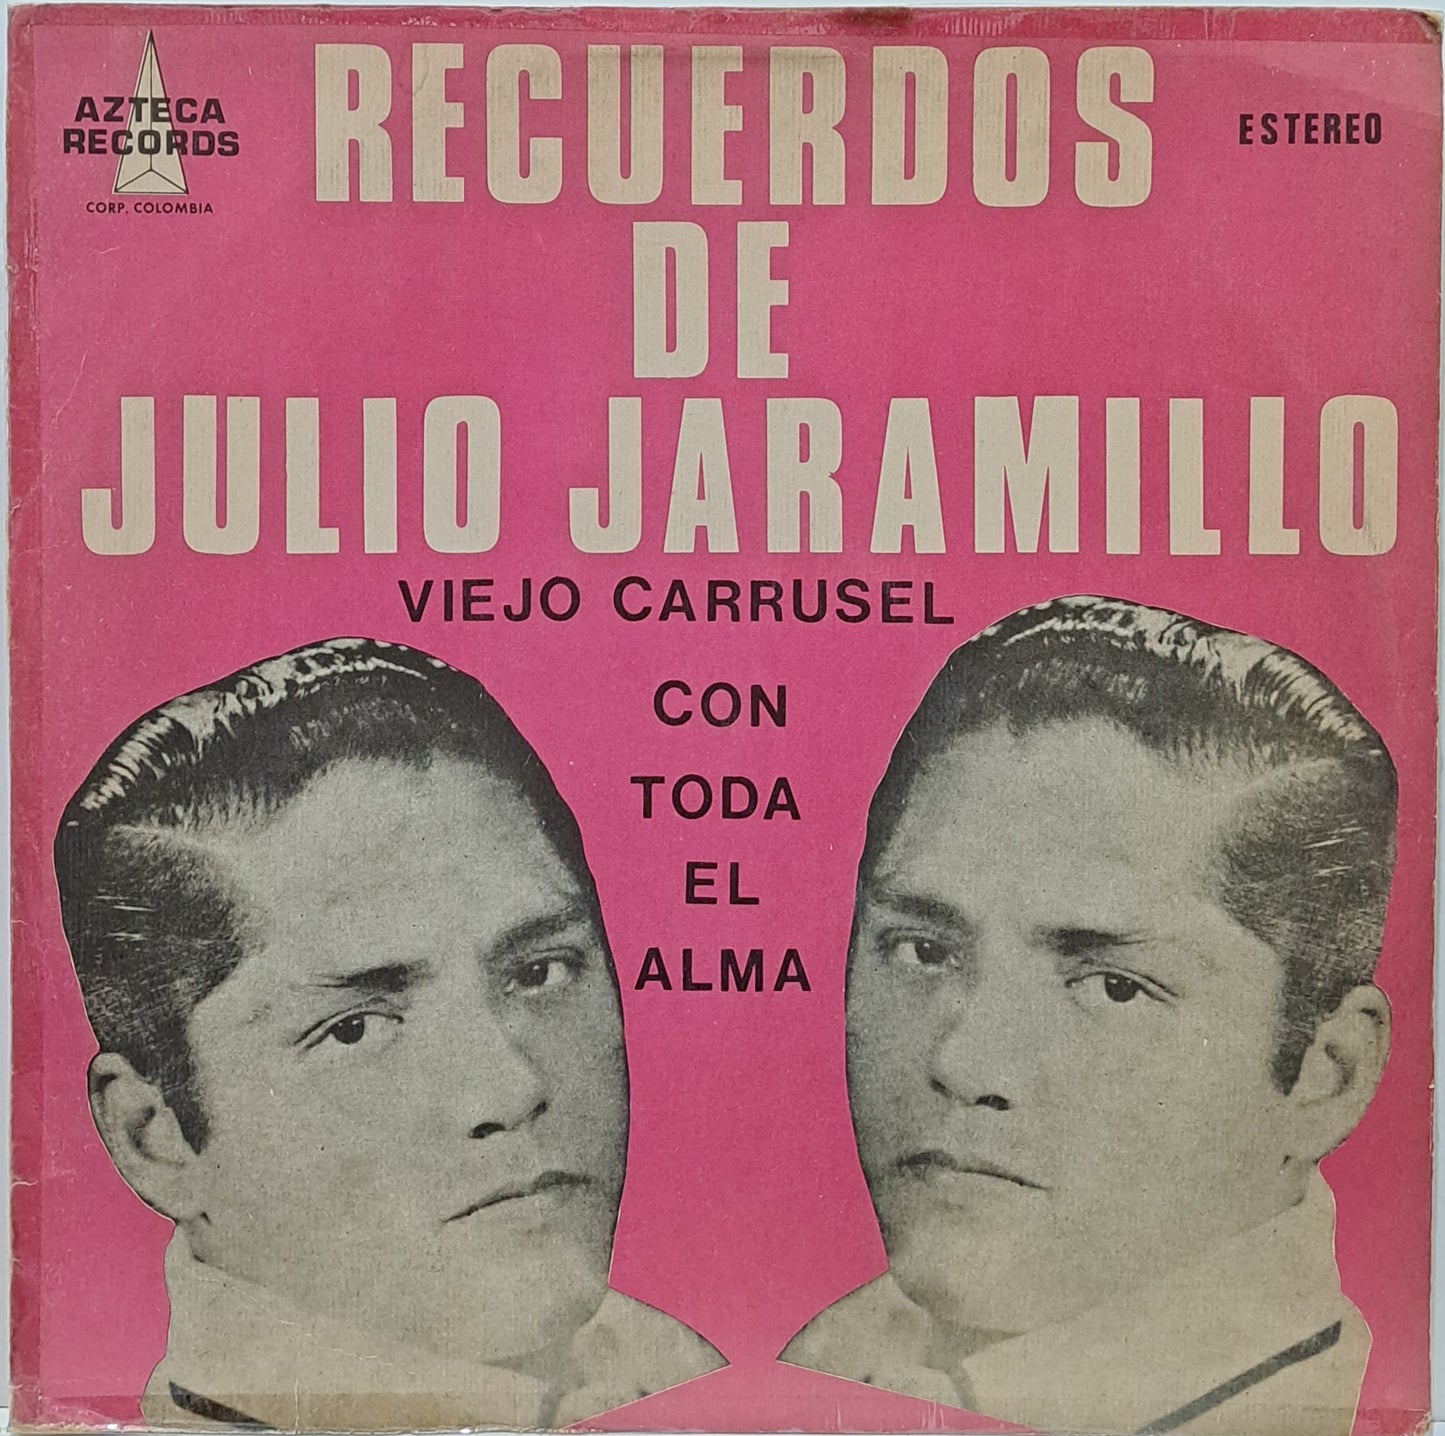 JULIO JARAMILLO - RECUERDOS DE  LP